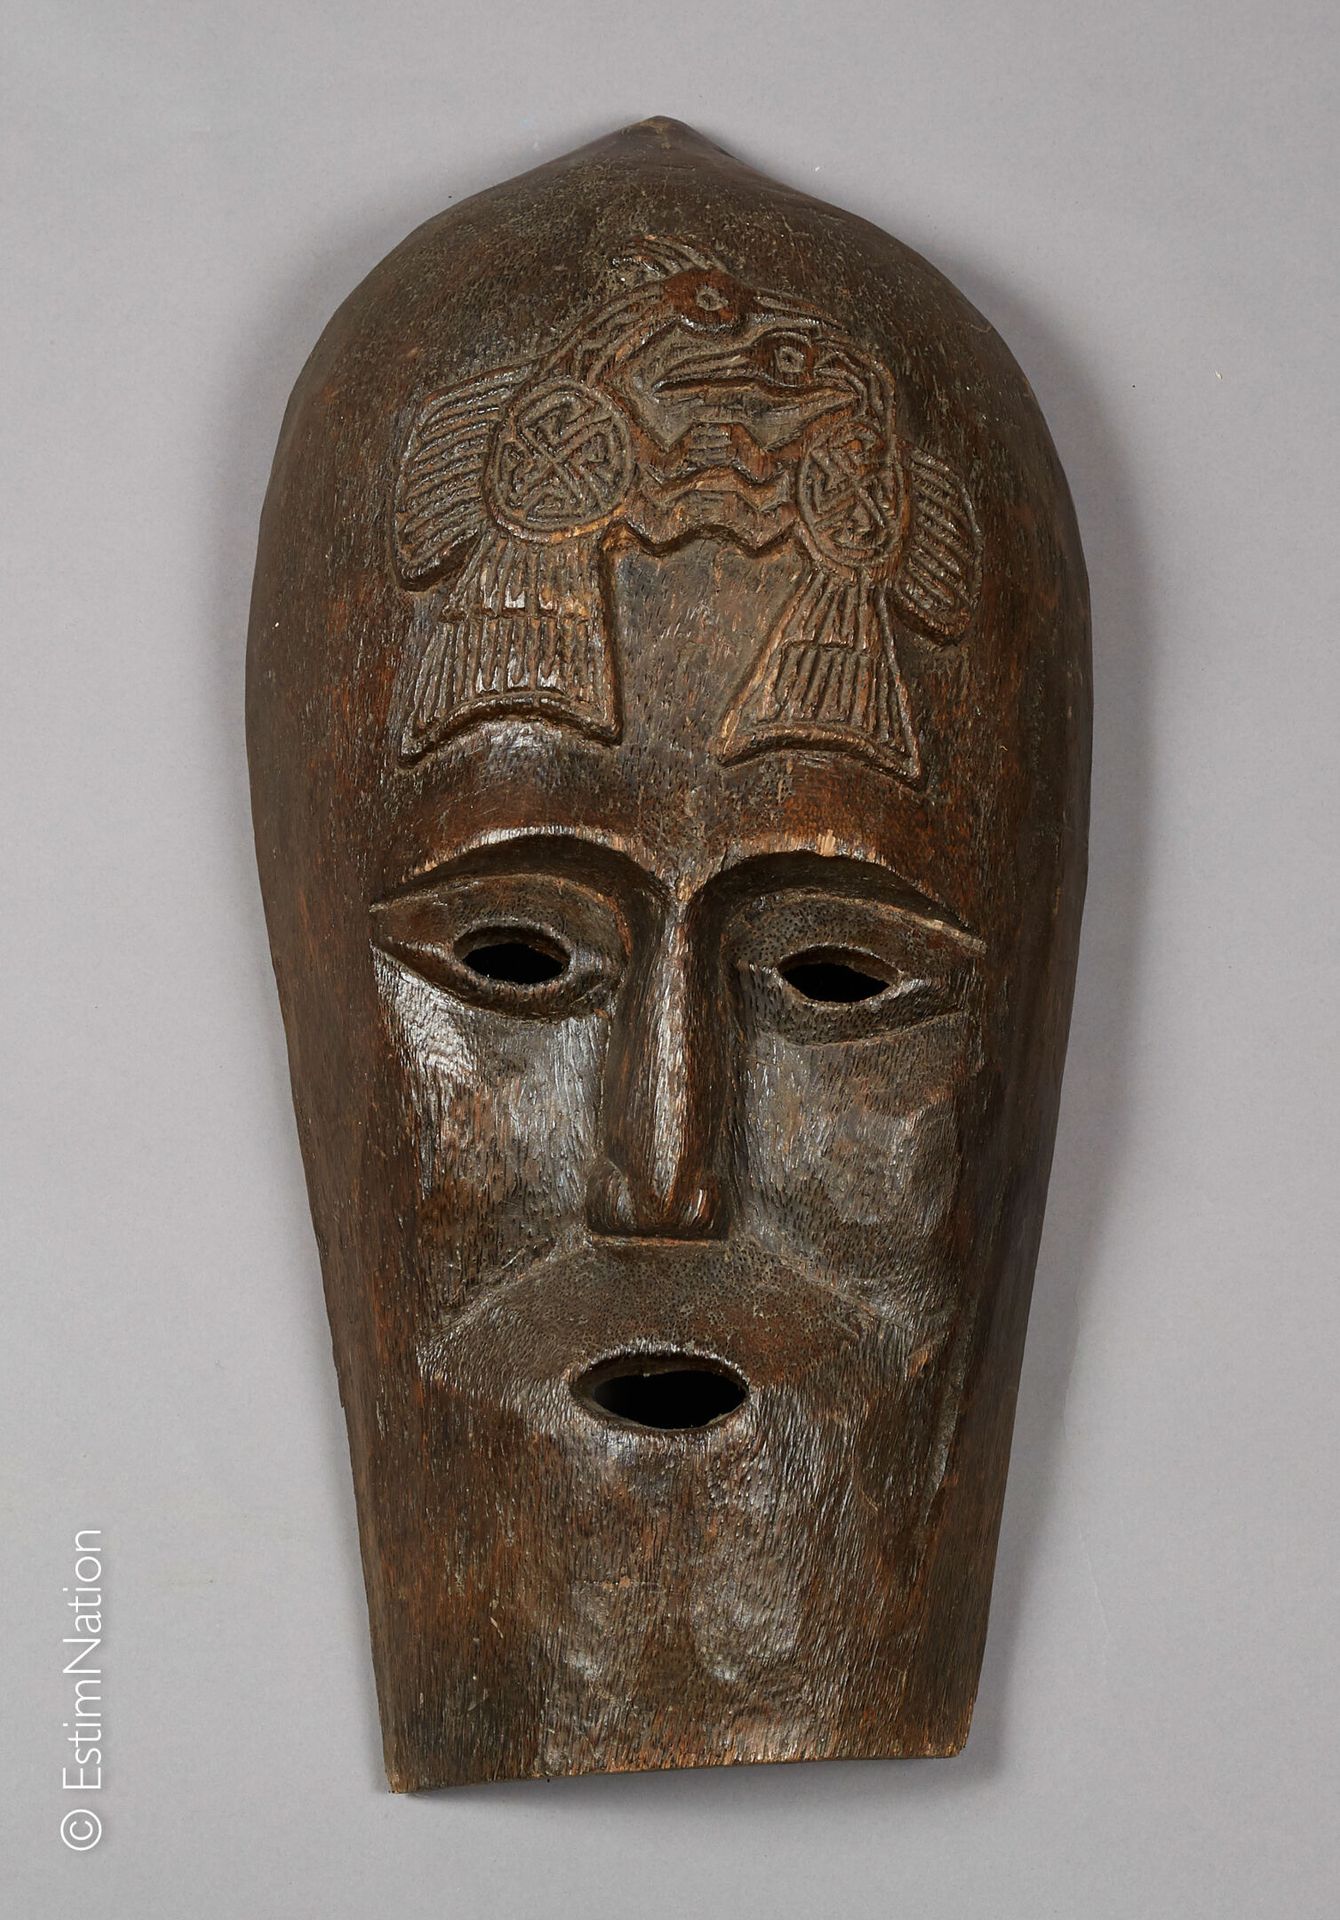 TIMOR 钛合金



拟人化的木雕面具，额头上刻有两只鸟对峙的纹饰



高度 : 80 cm - 宽度 : 40 cm - 深度 : 20 cm 



&hellip;